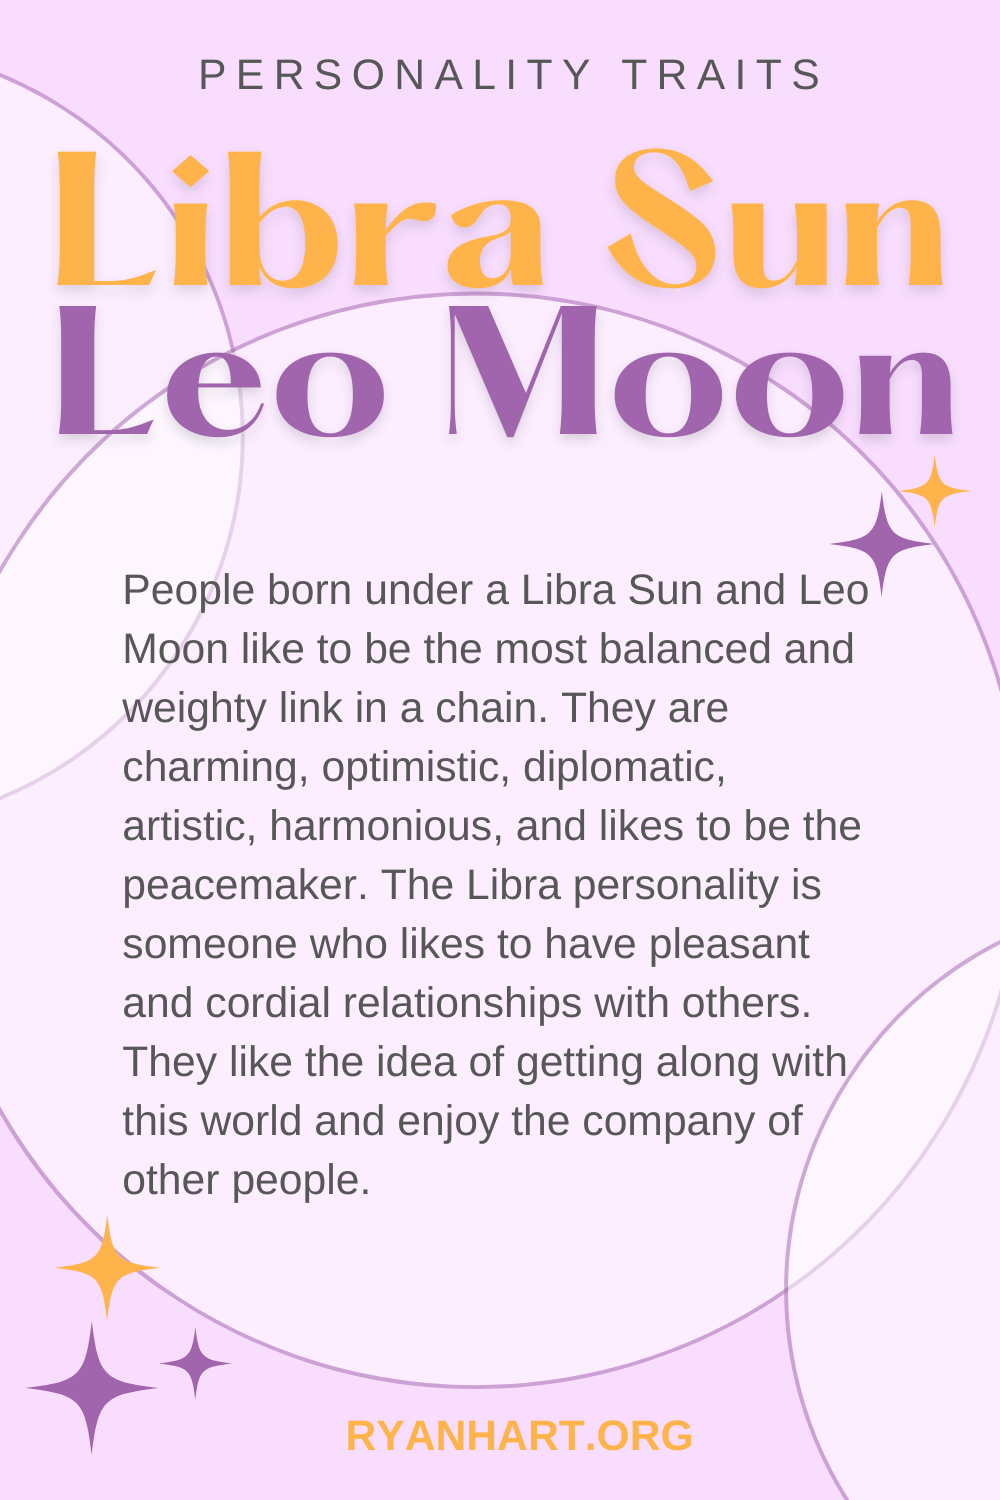 Libra Sun Leo Moon Description